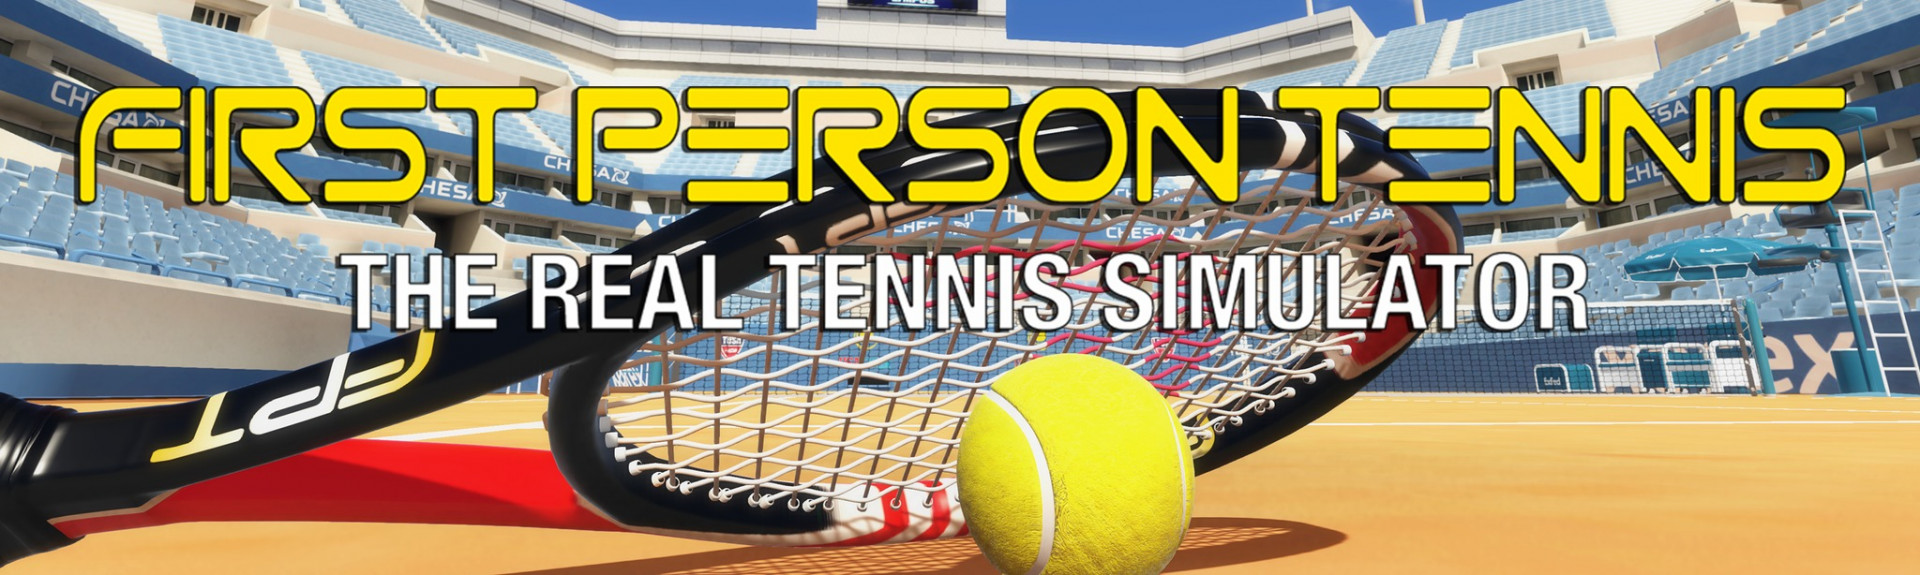 First Person Tennis: ANÁLISIS